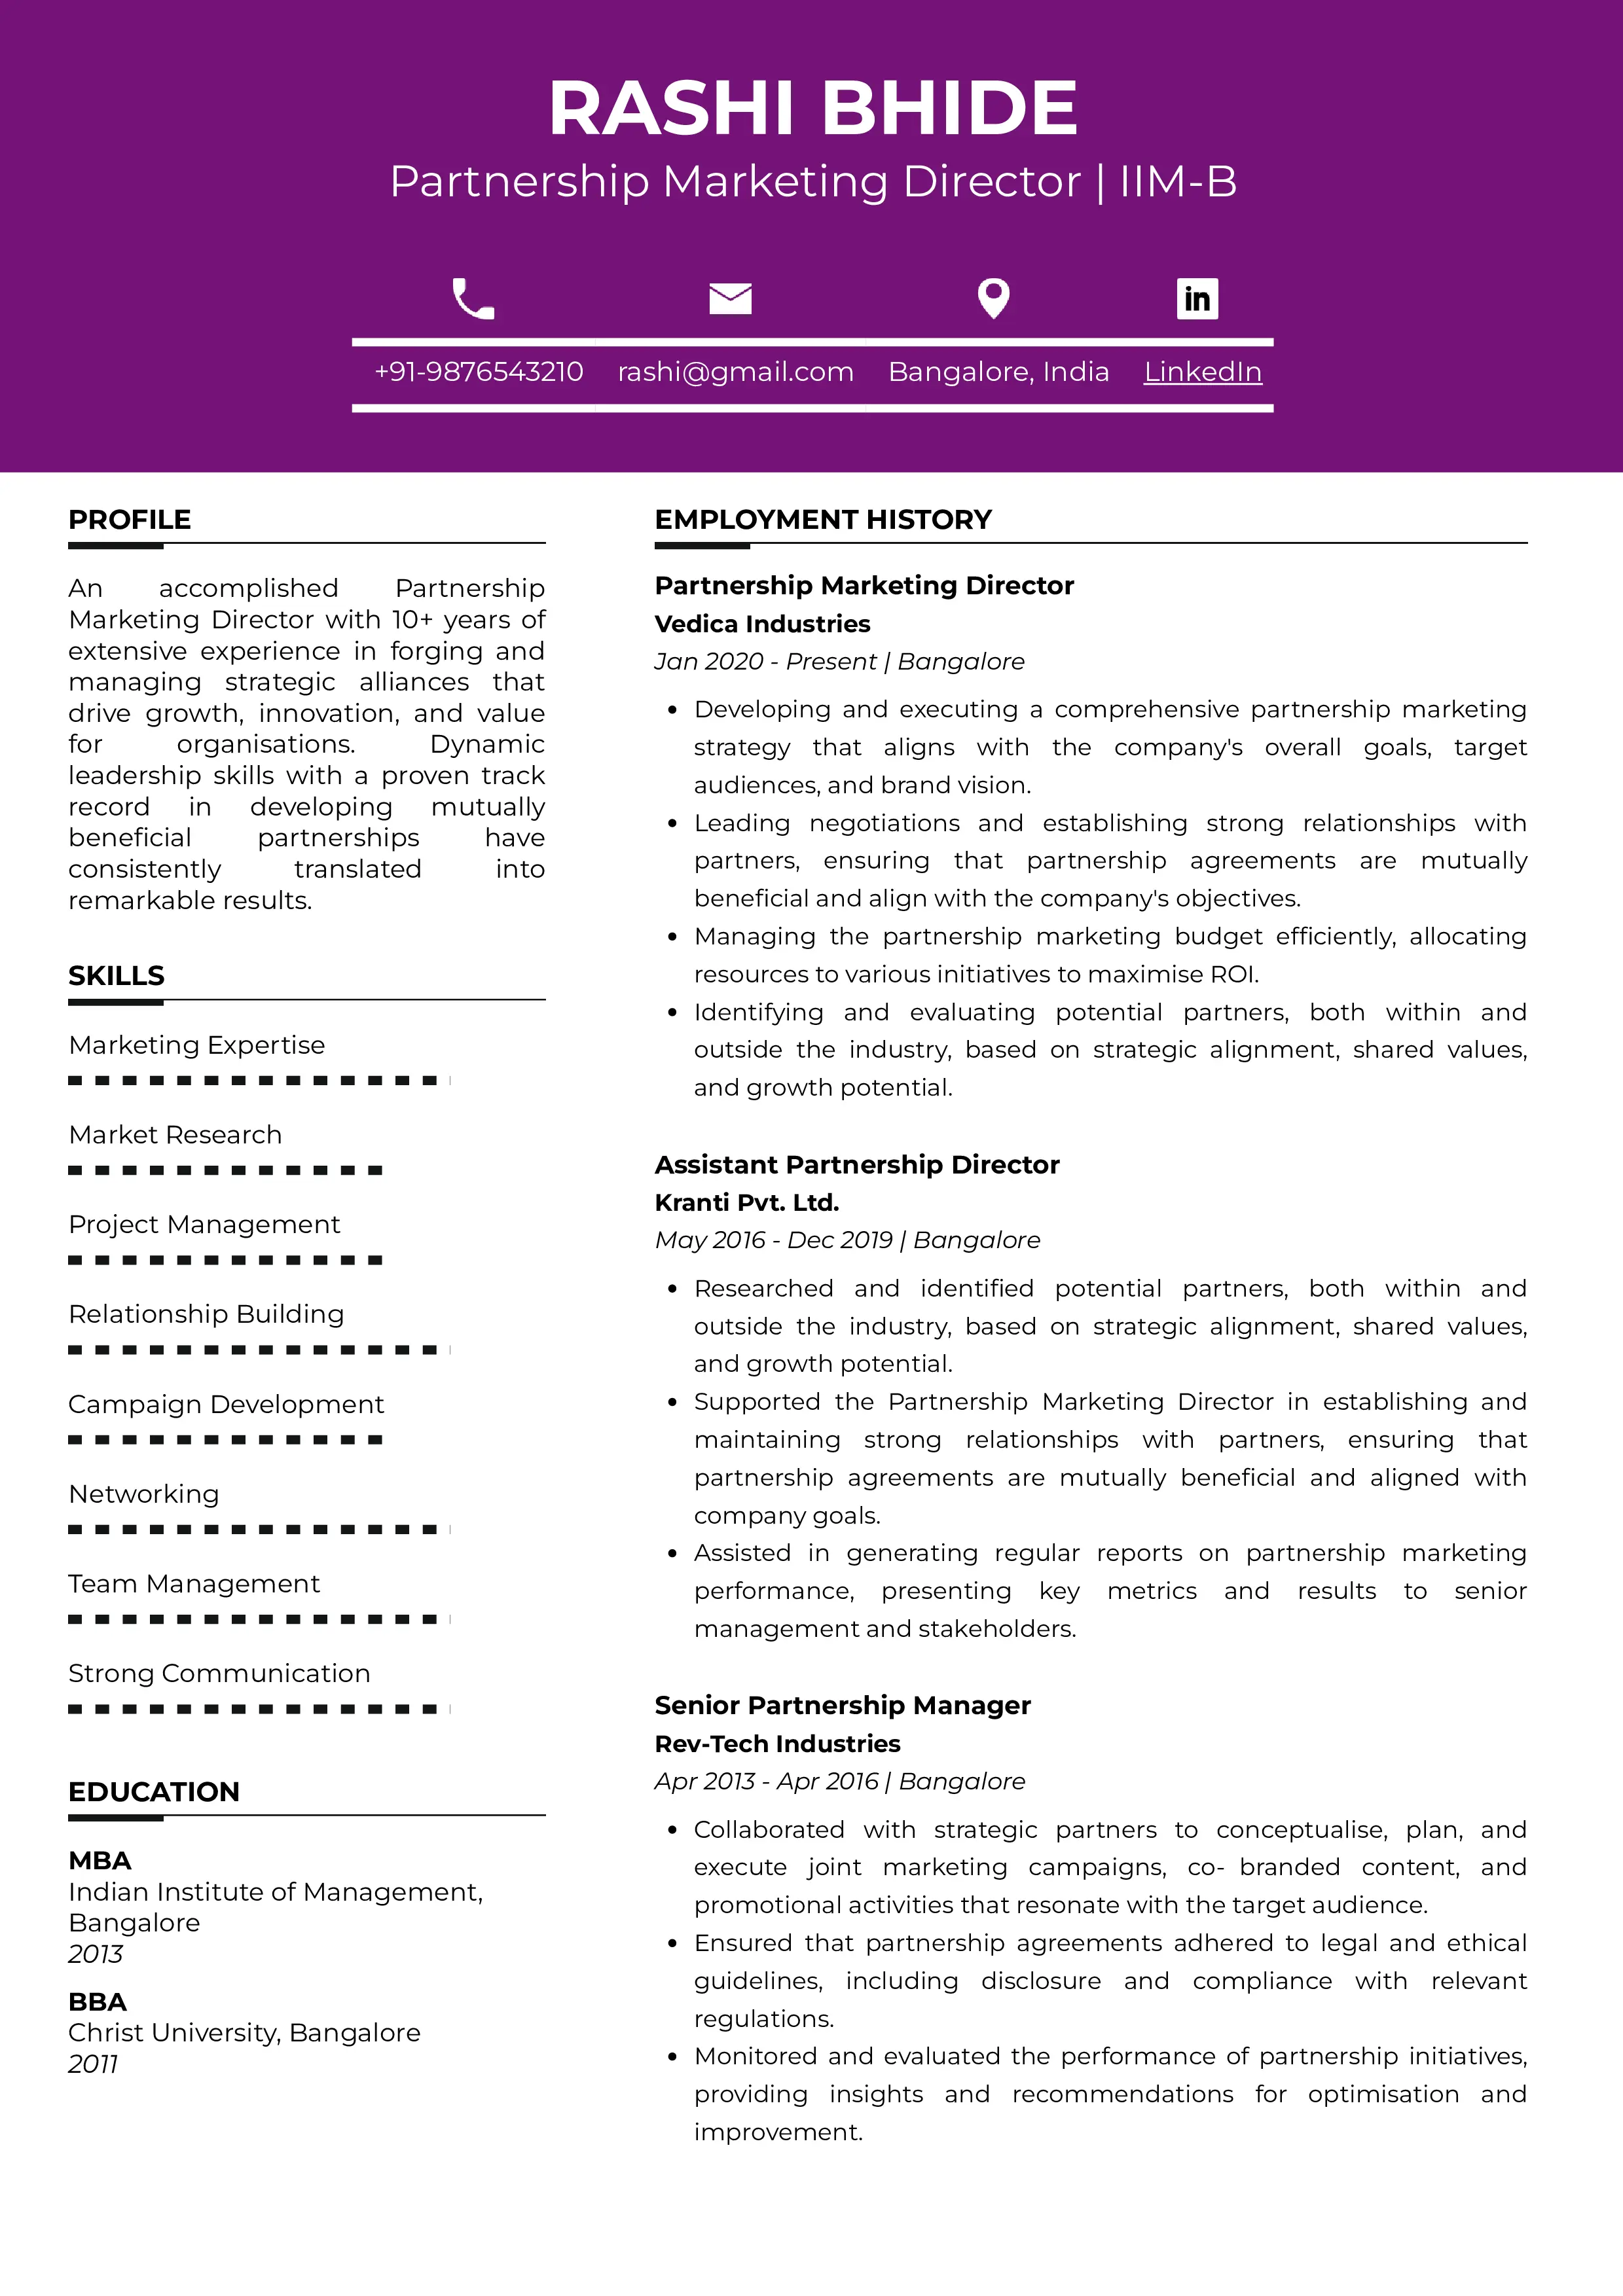 Sample Resume of Partnership Marketing Director | Free Resume Templates & Samples on Resumod.co